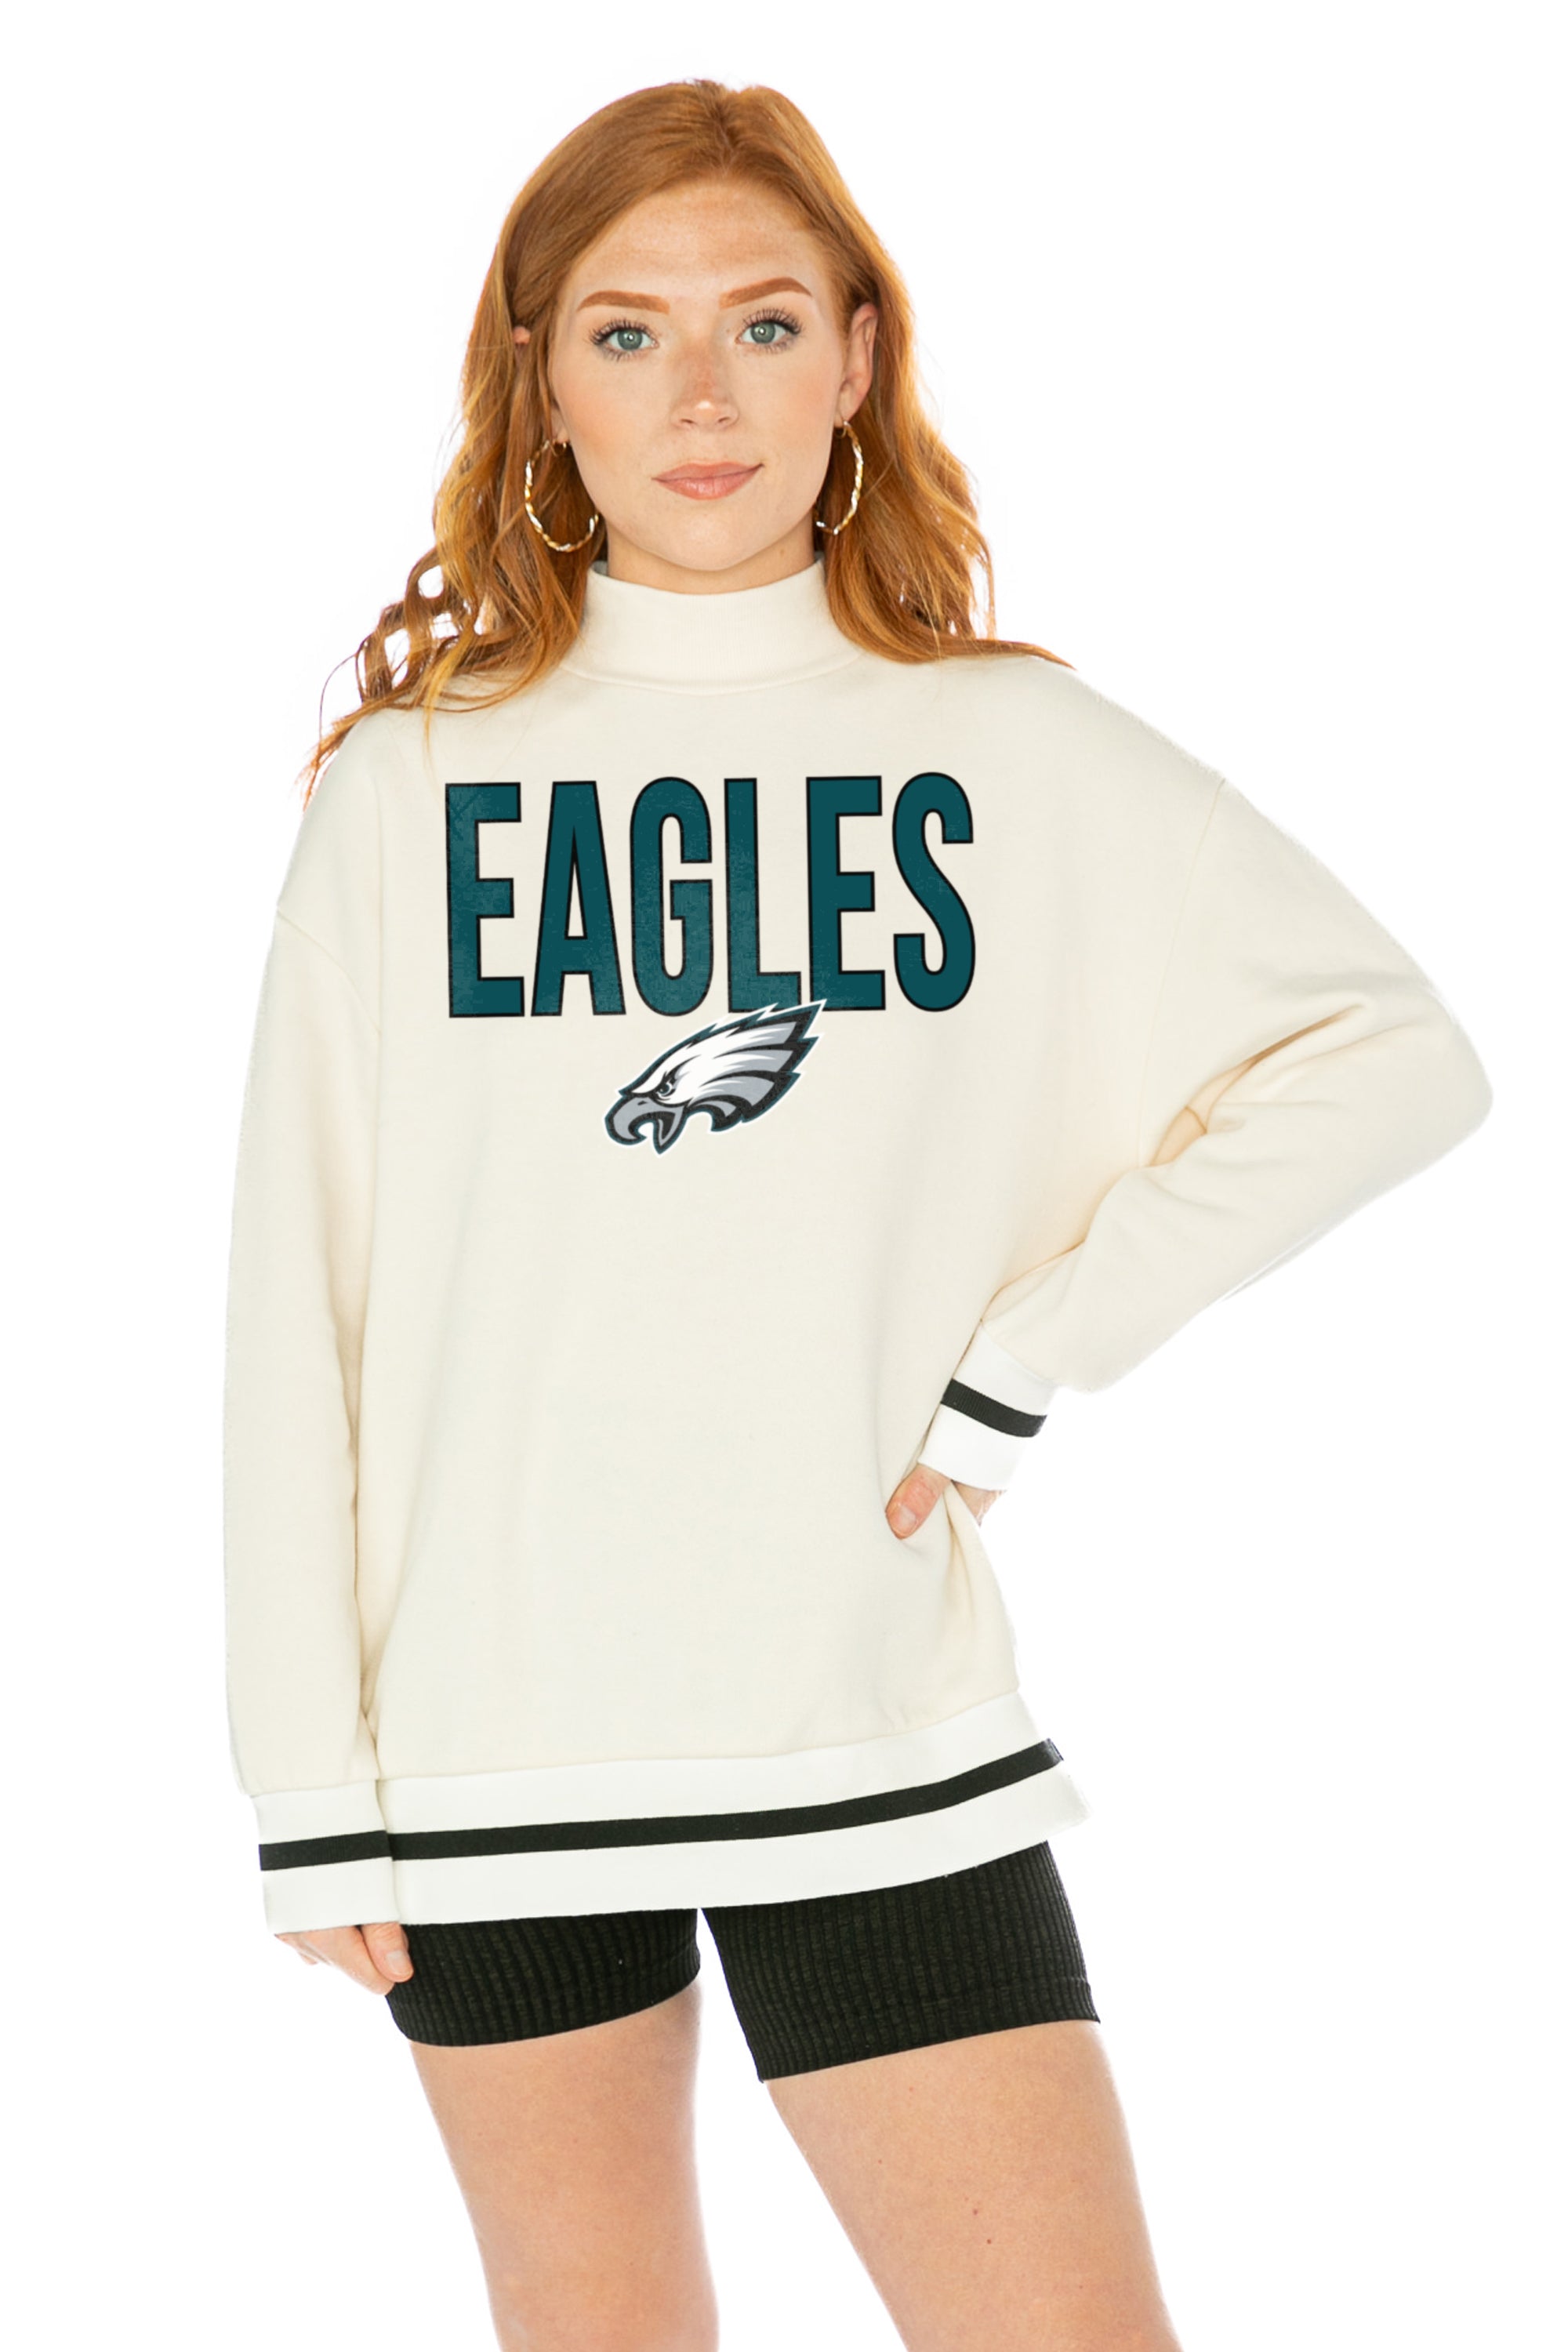 Philadelphia Eagles Gameday Couture Women's End Zone Envy